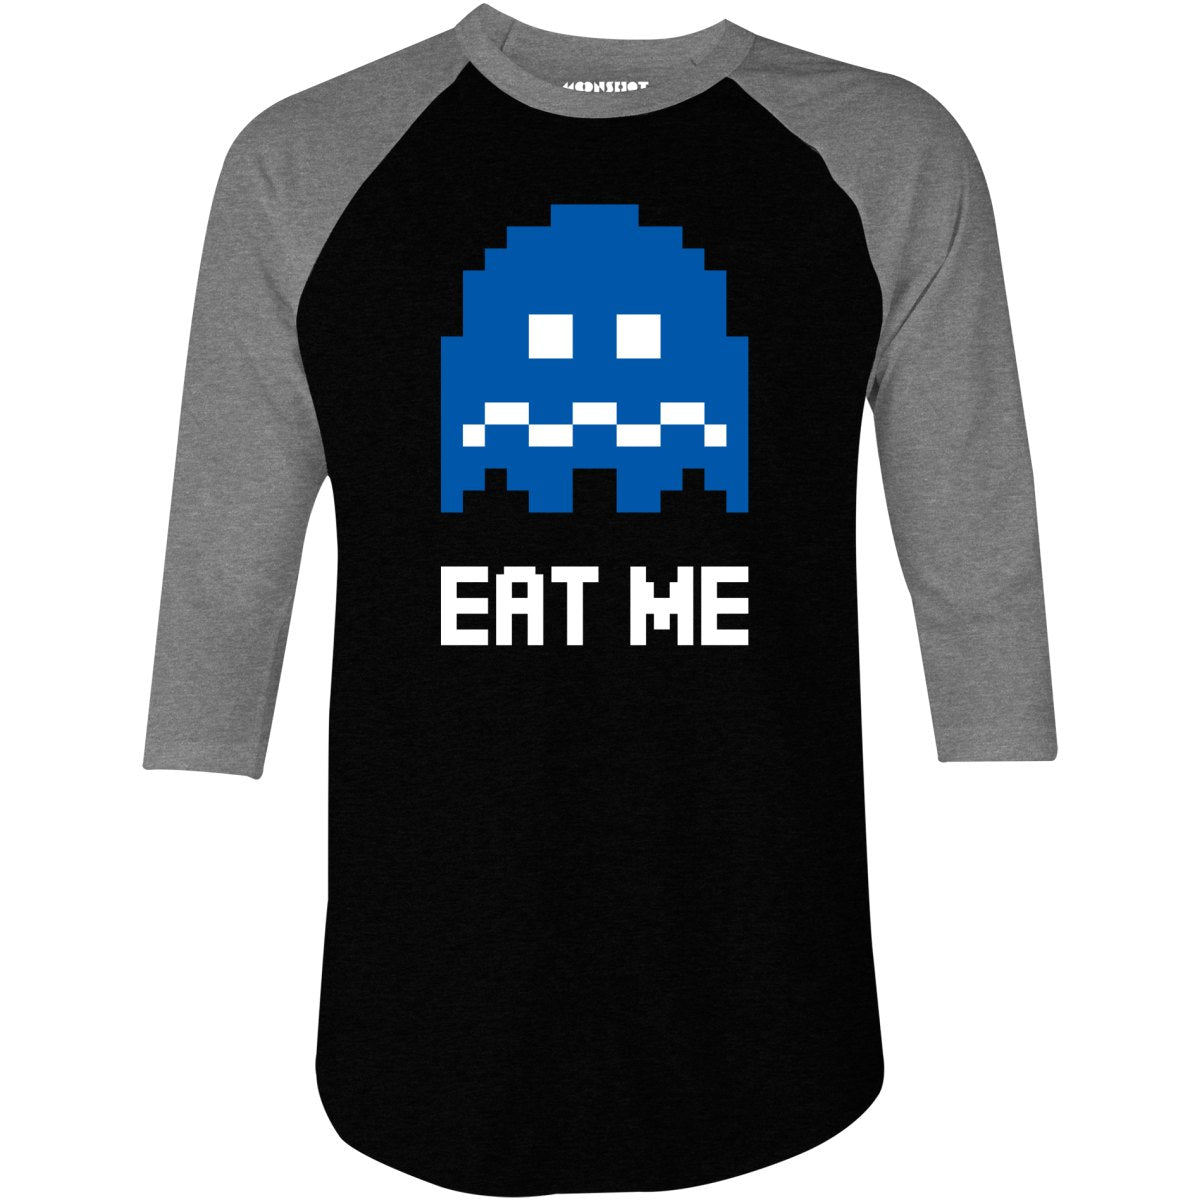 Eat Me - 3/4 Sleeve Raglan T-Shirt